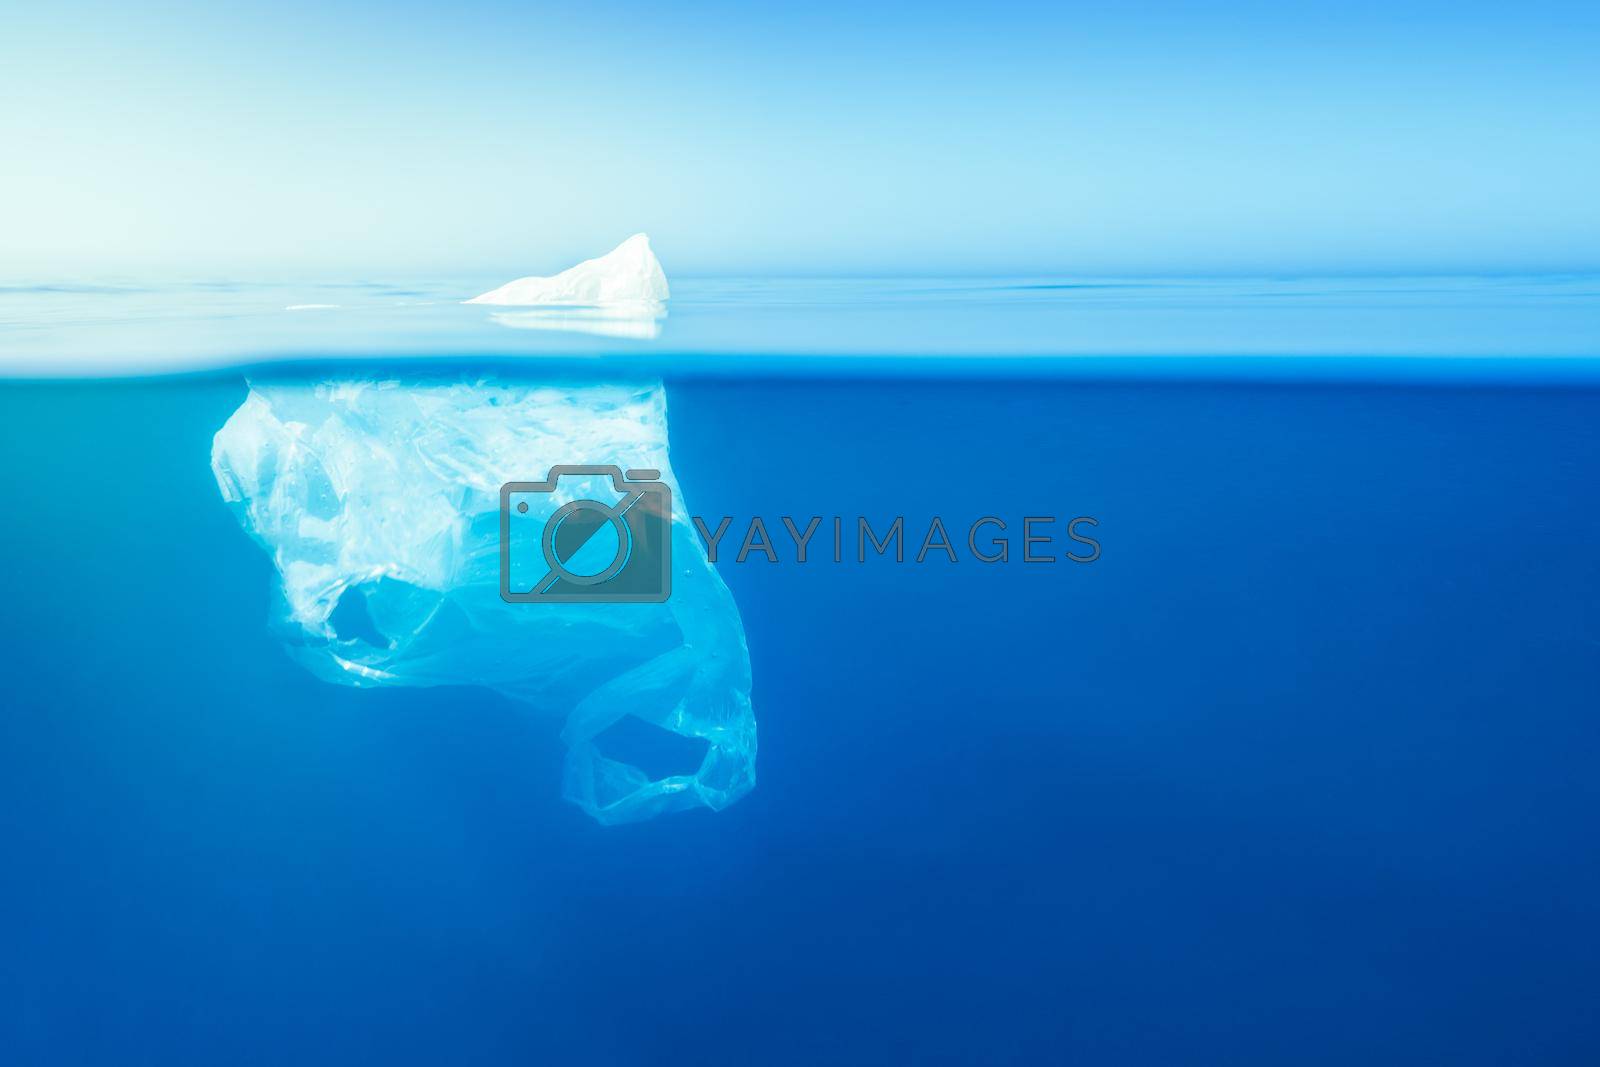 Royalty free image of plastic bag floating at water, iceberg metaphor by raulmelldo